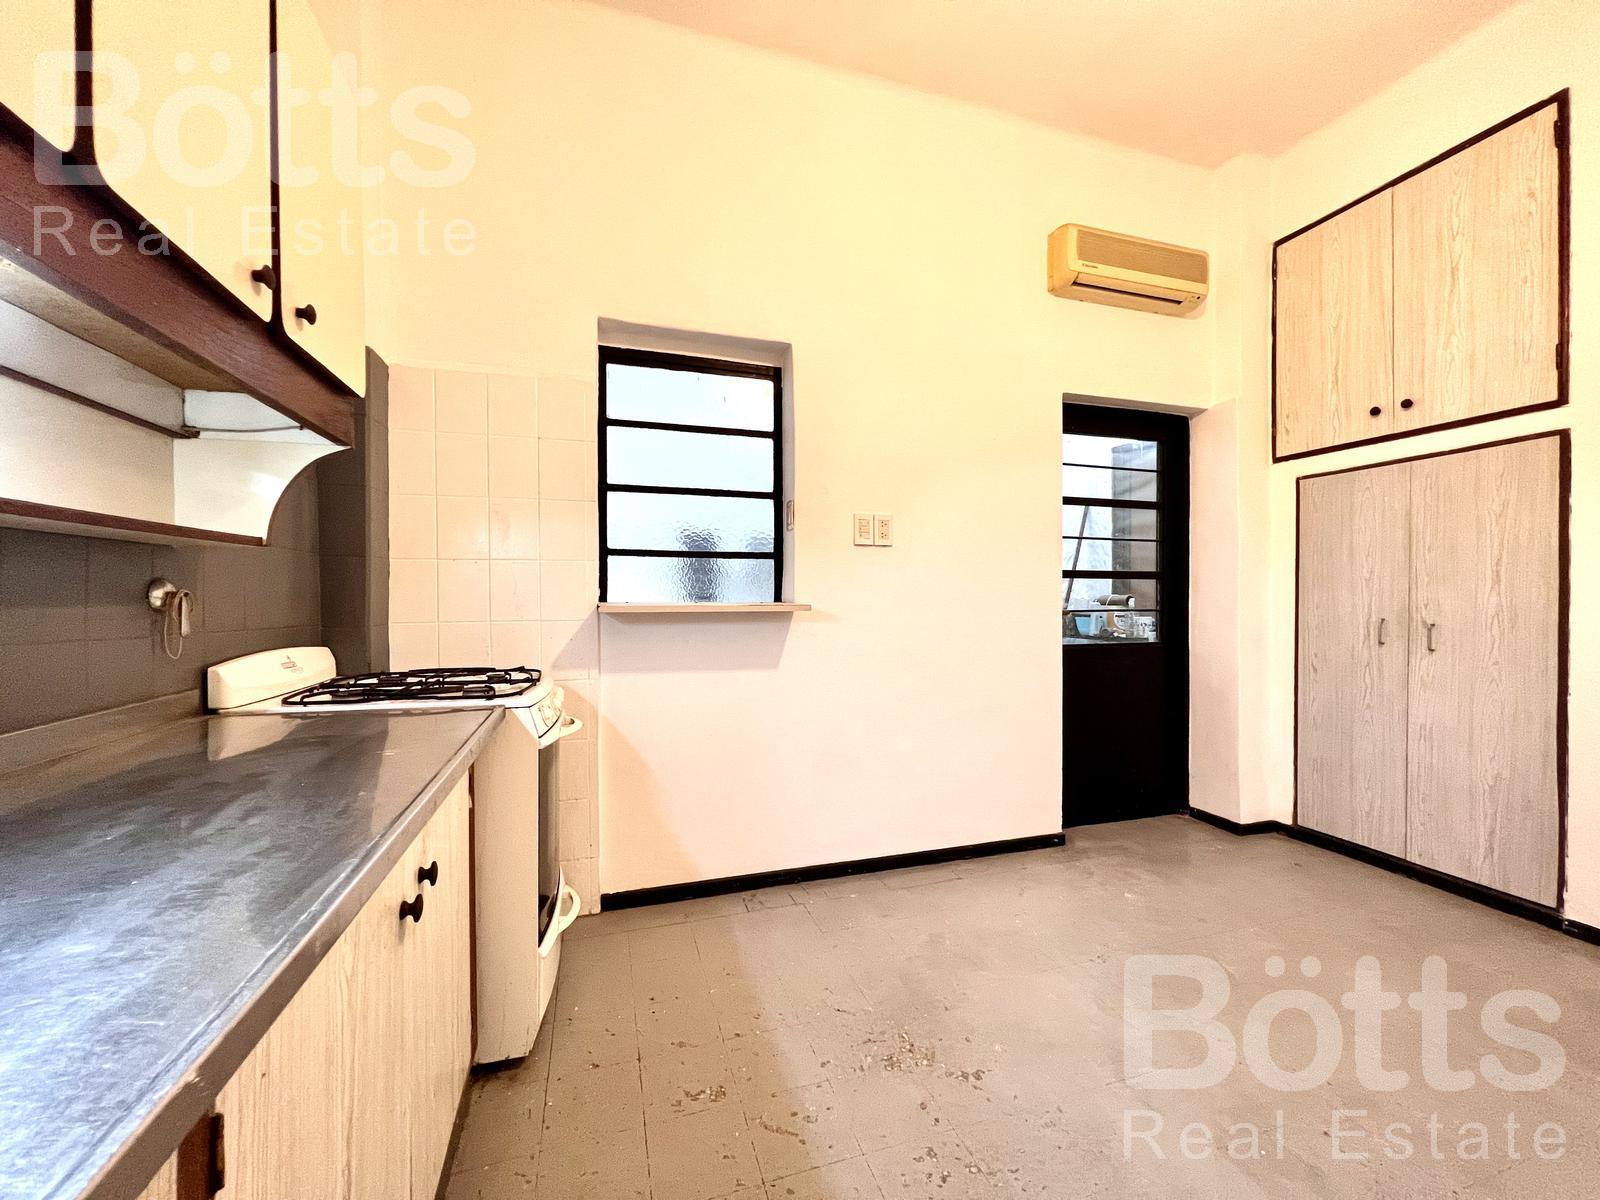 #5068517 | Rental | House | Belgrano (Bötts Real Estate)